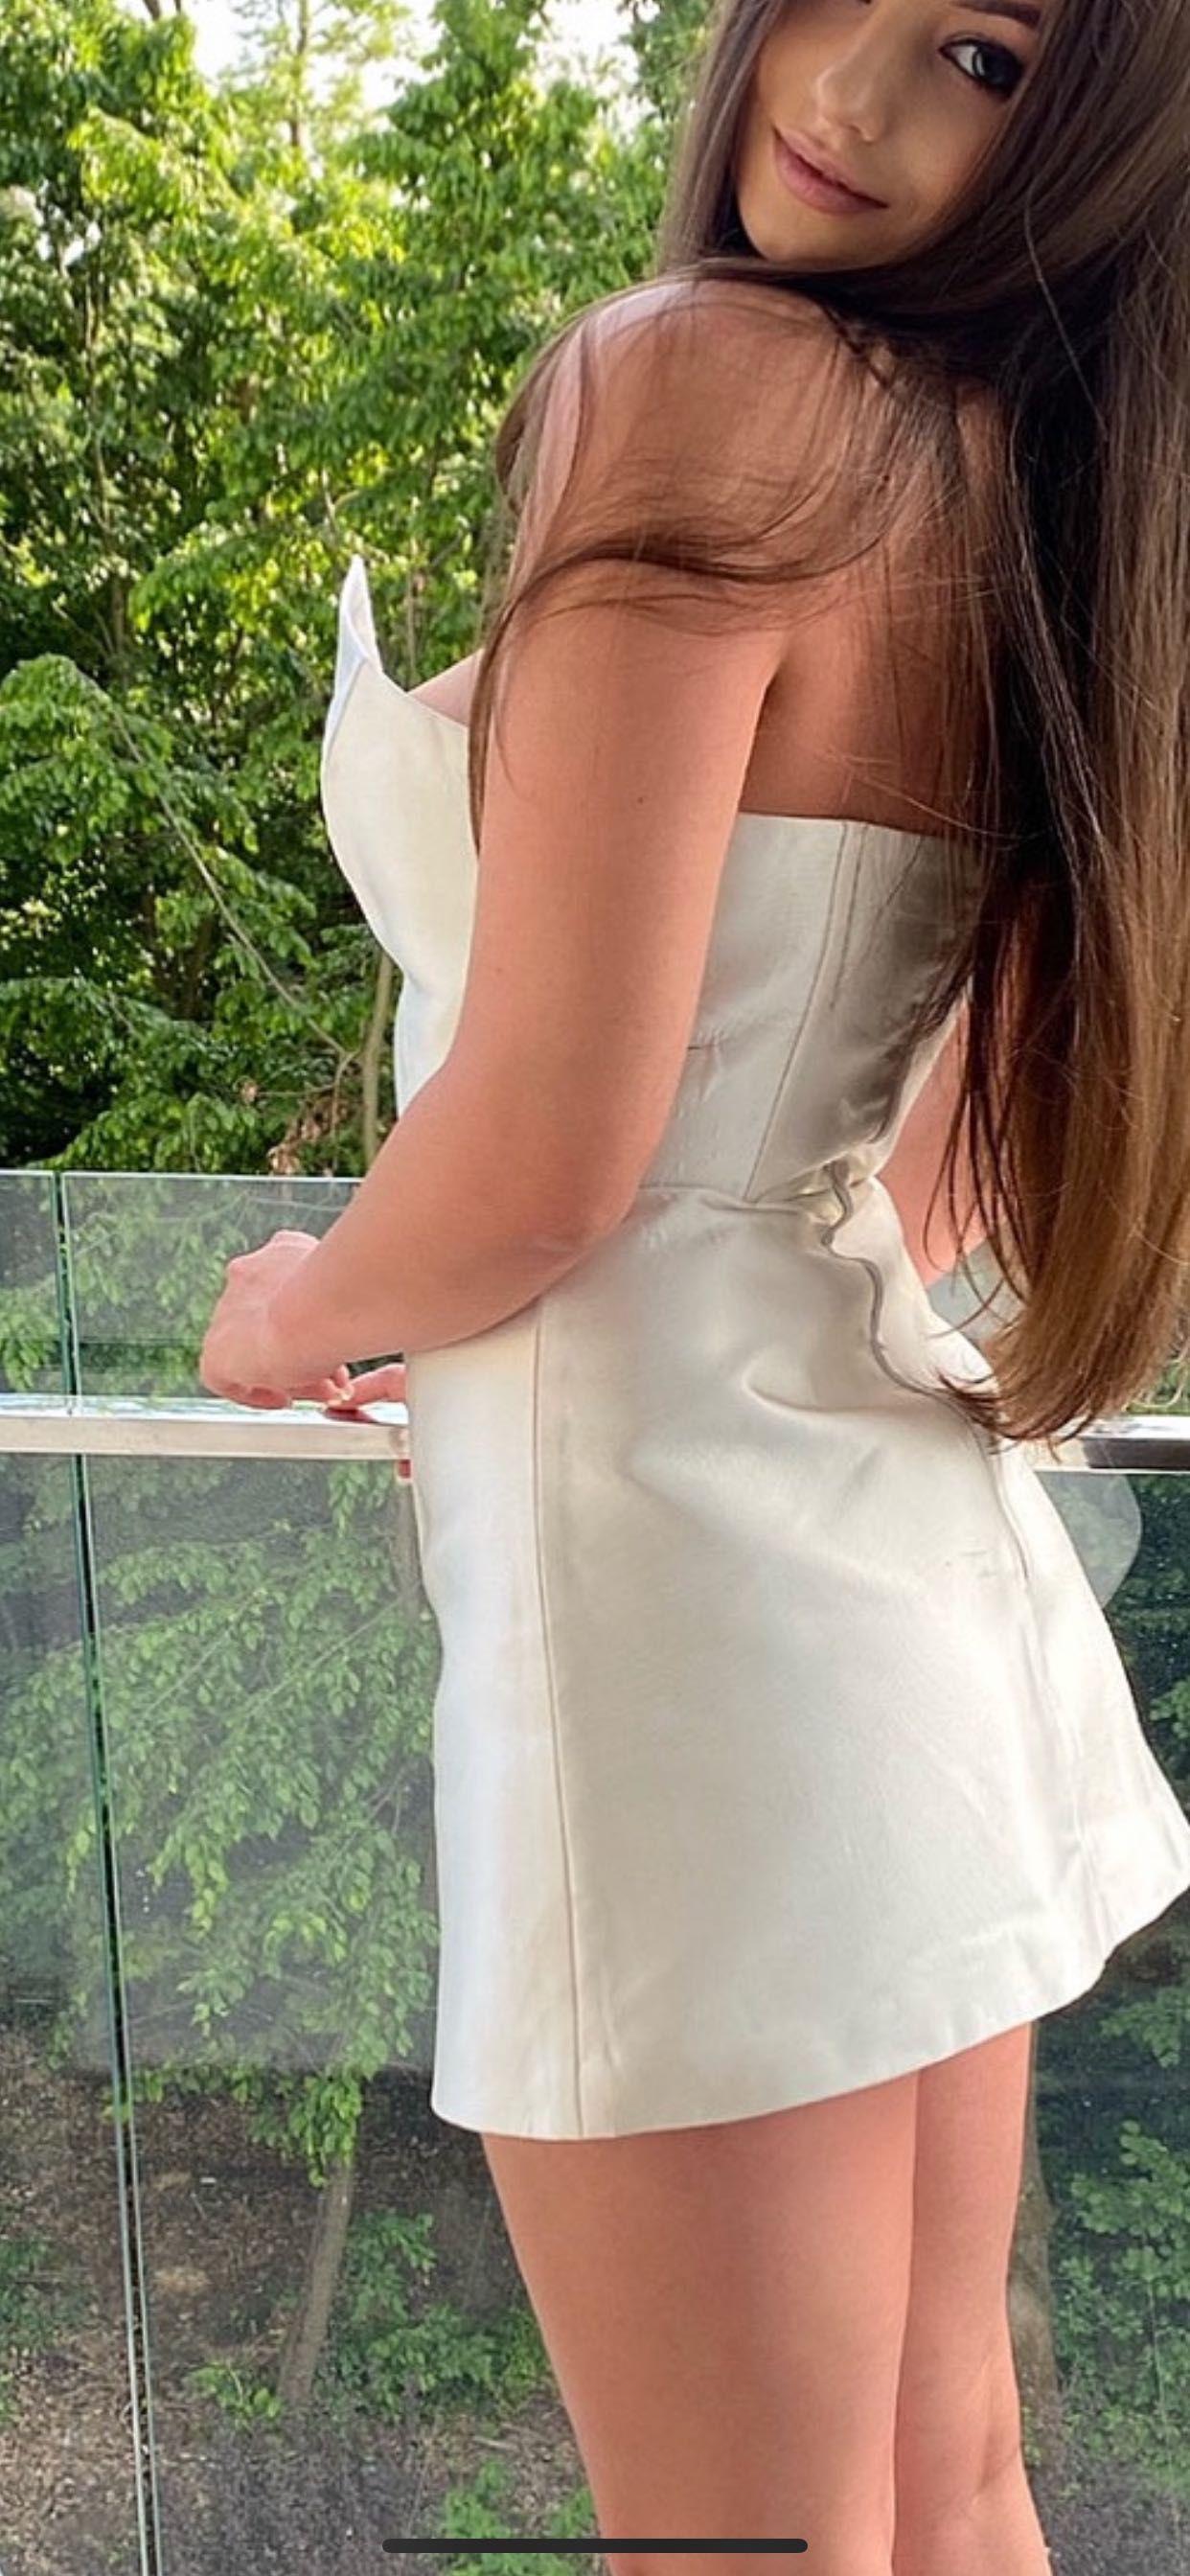 Біле коротке плаття